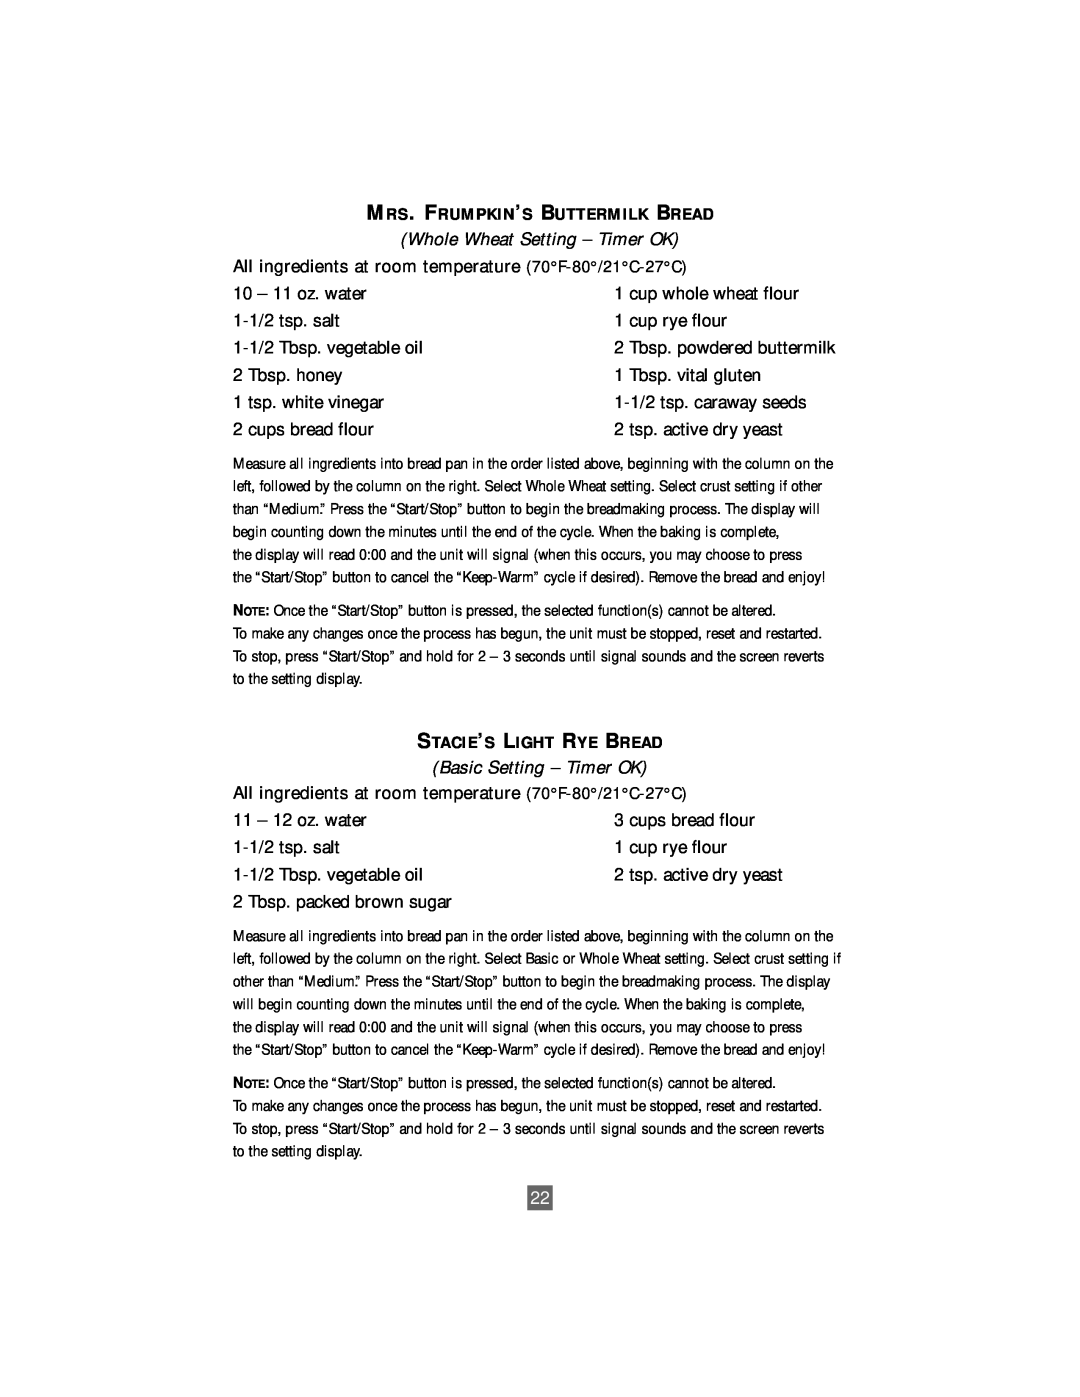 Oster P. N. 101017 manual Whole Wheat Setting - Timer OK, Basic Setting - Timer OK, Mrs. Frumpkin’S Buttermilk Bread 